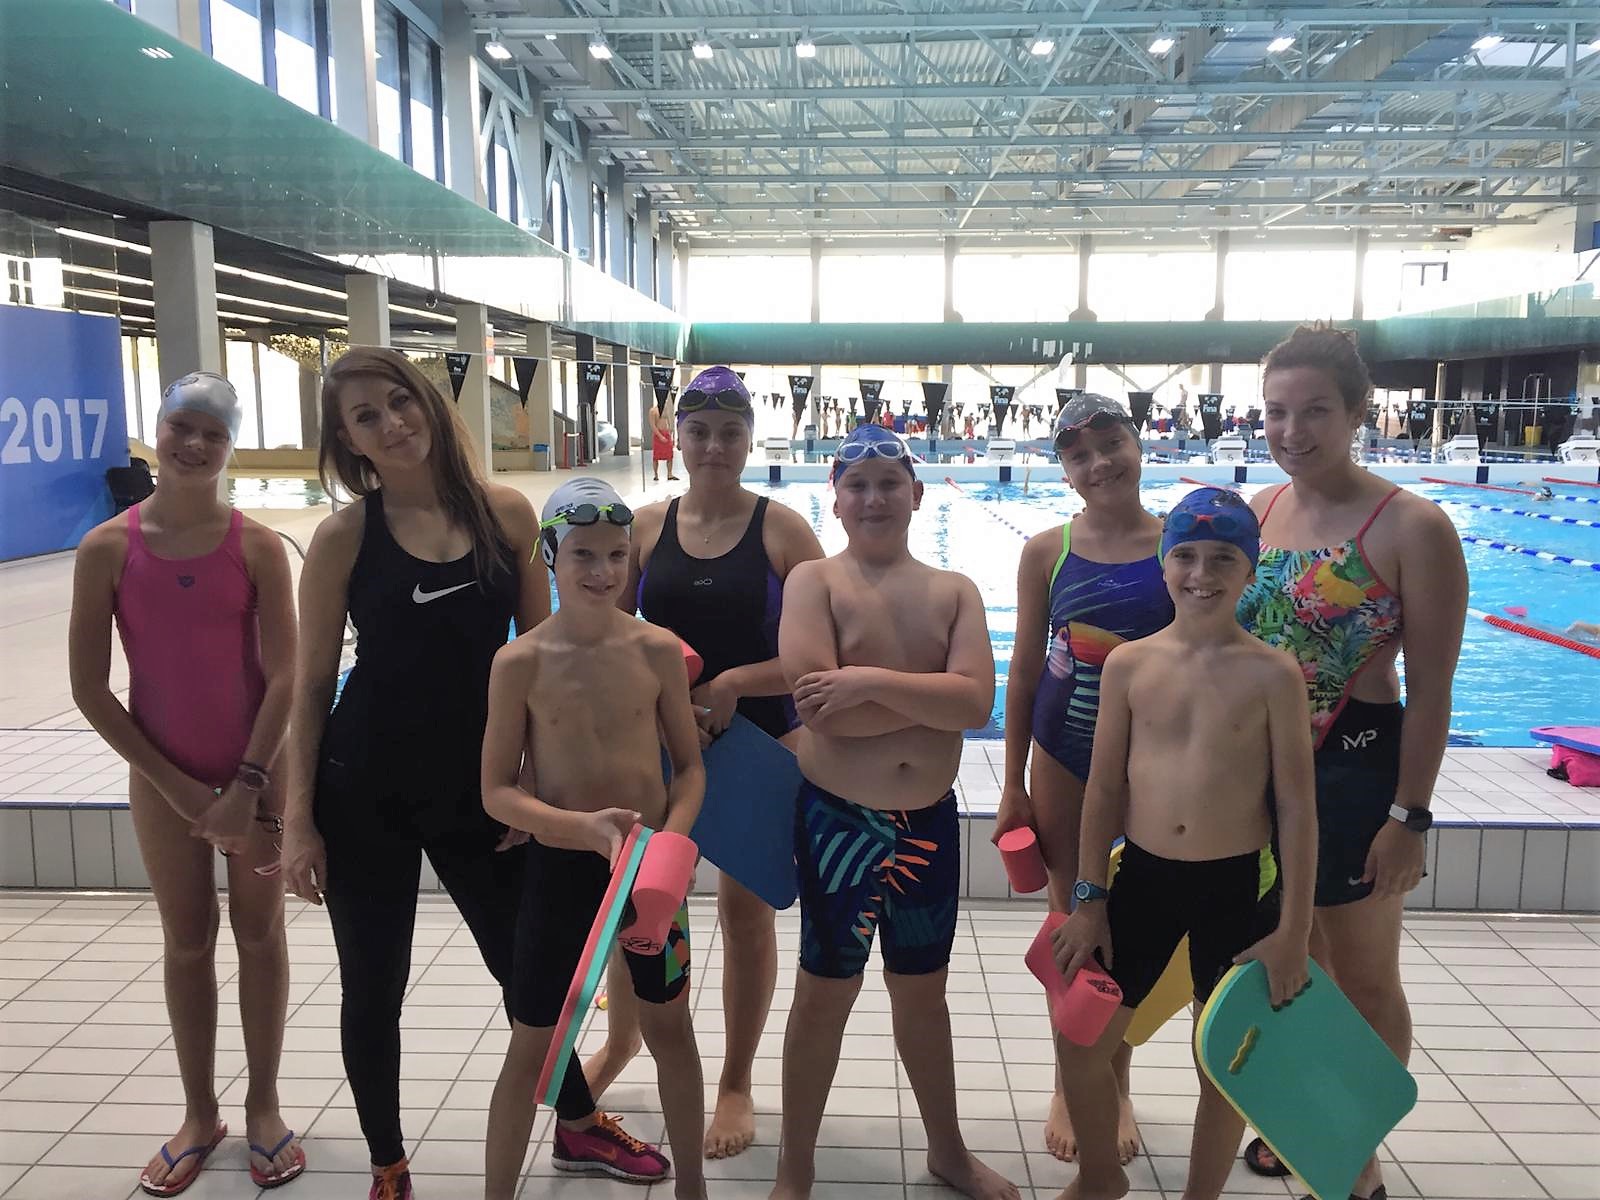 Swimming lessons in Iron Swim School started today! - IRON SWIM